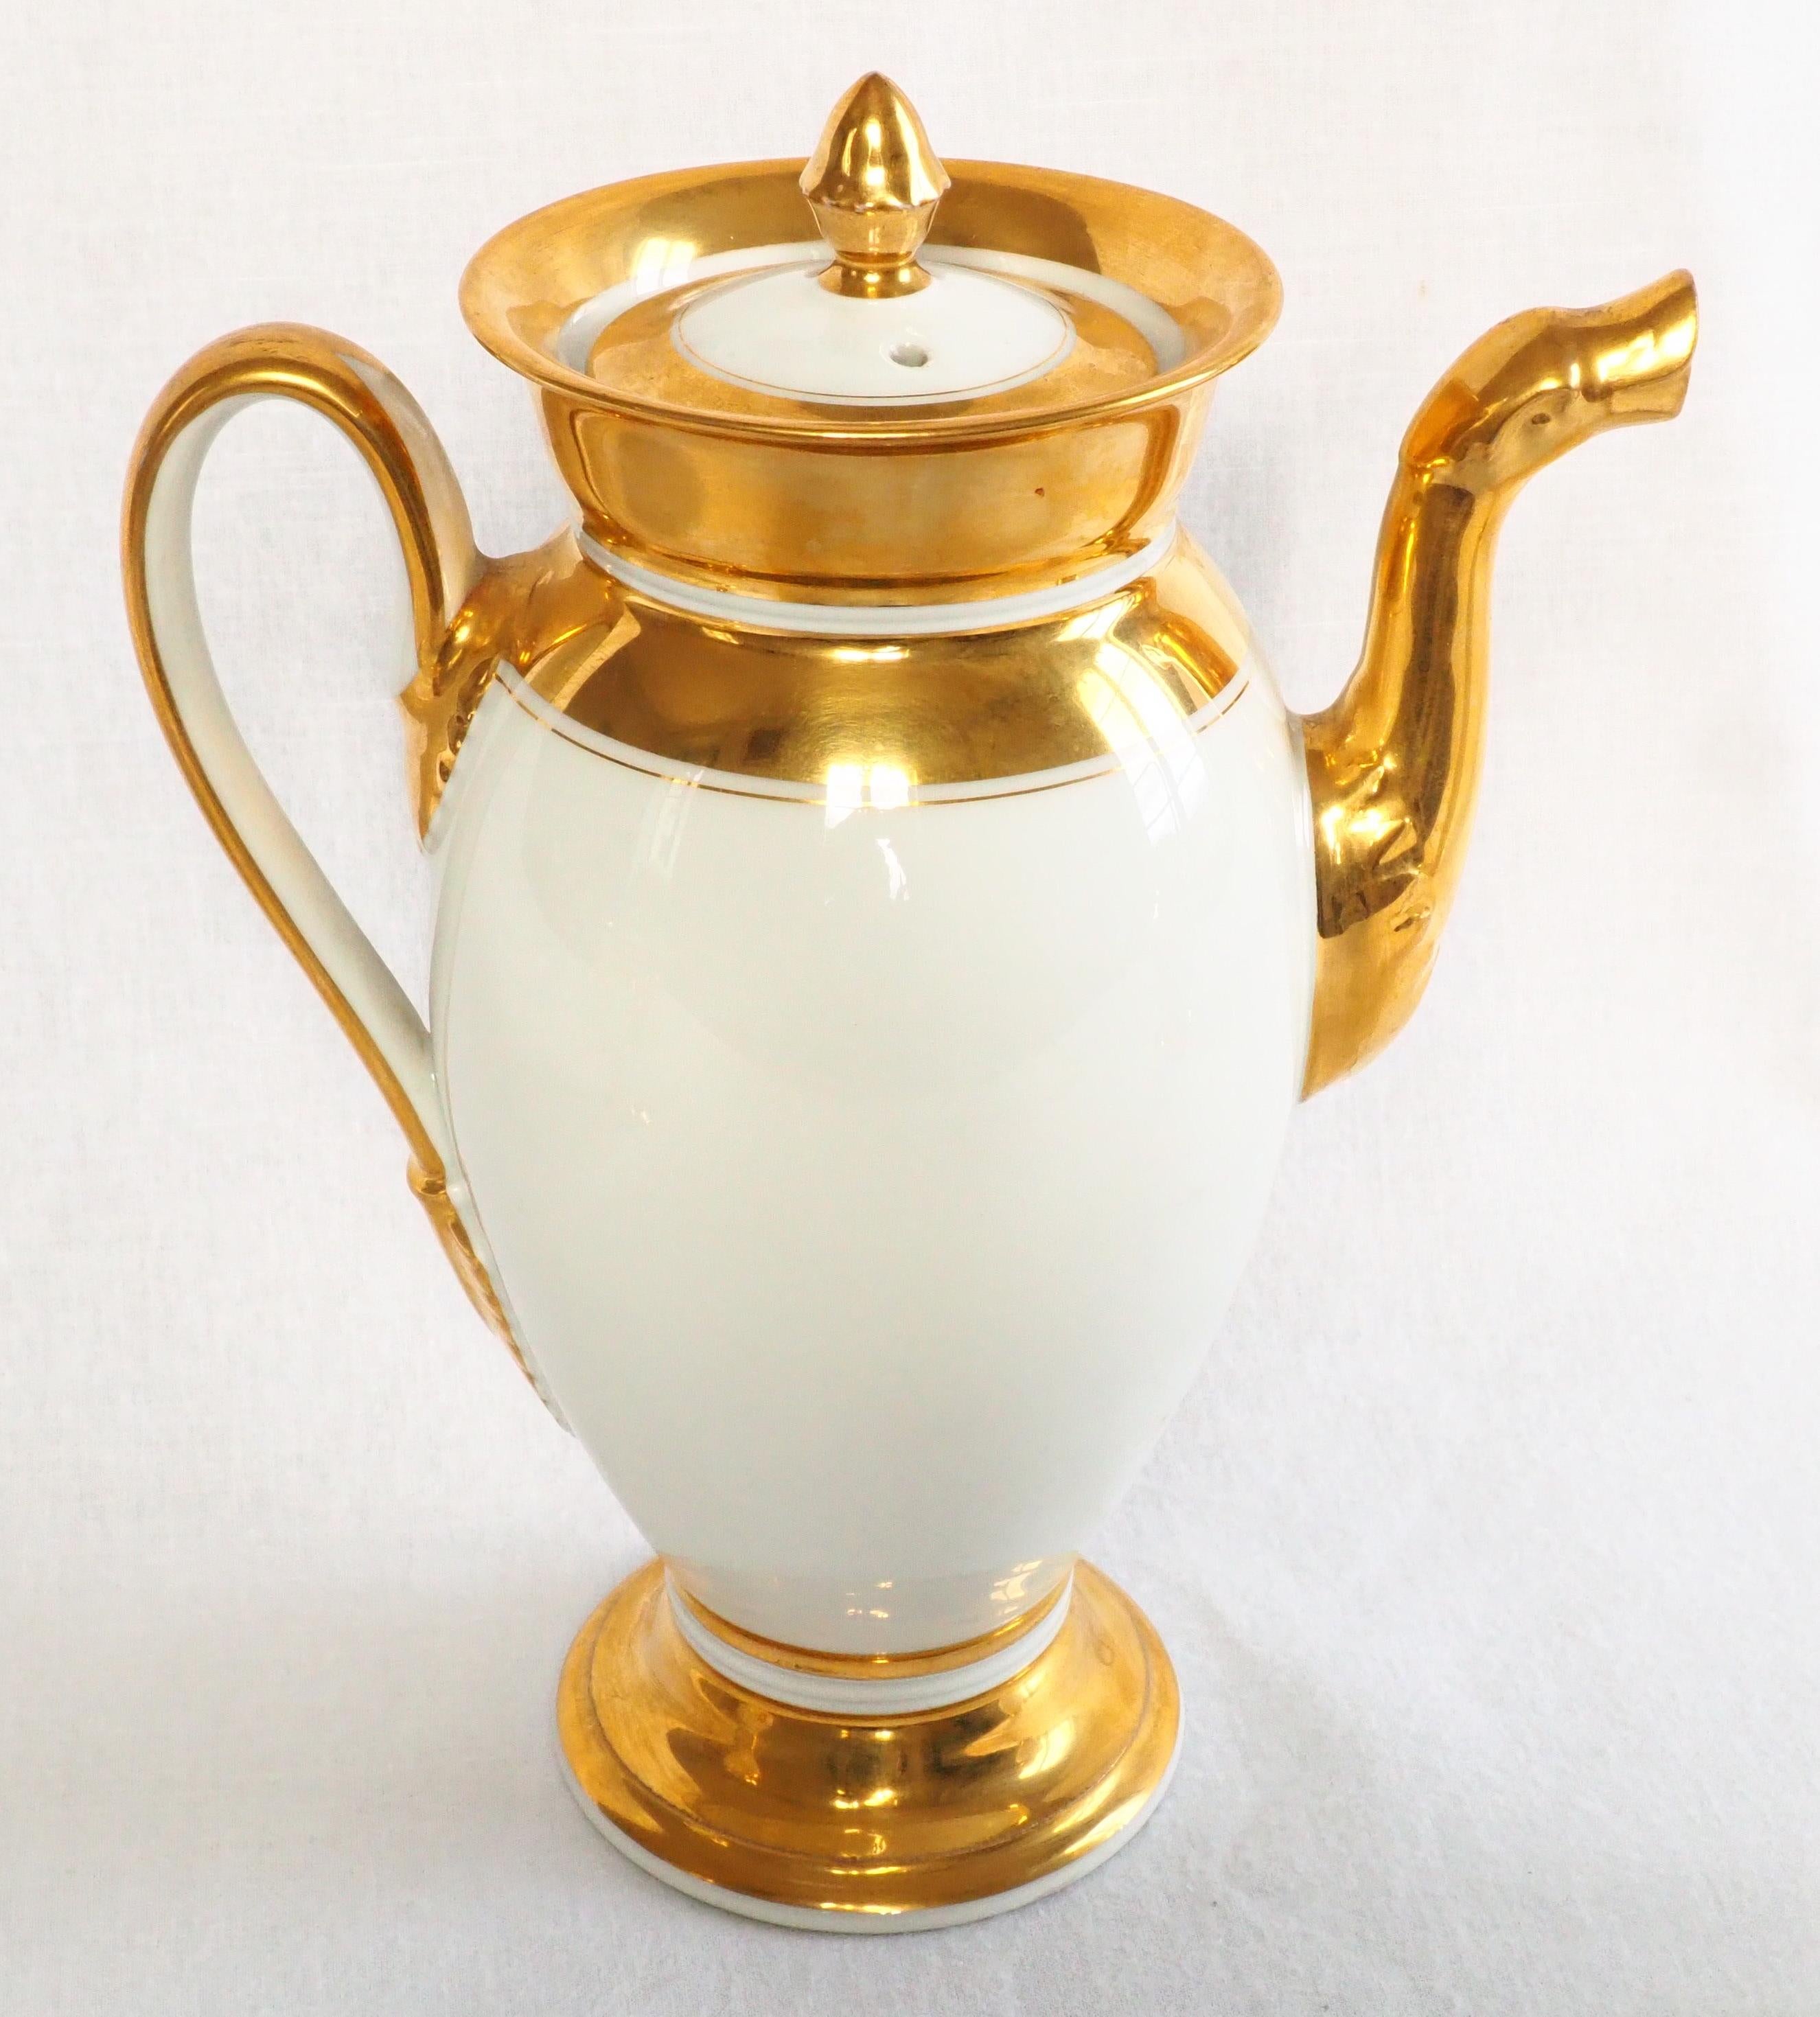 Gilt Antique French Empire Paris porcelain serving coffee set - early 19th century For Sale